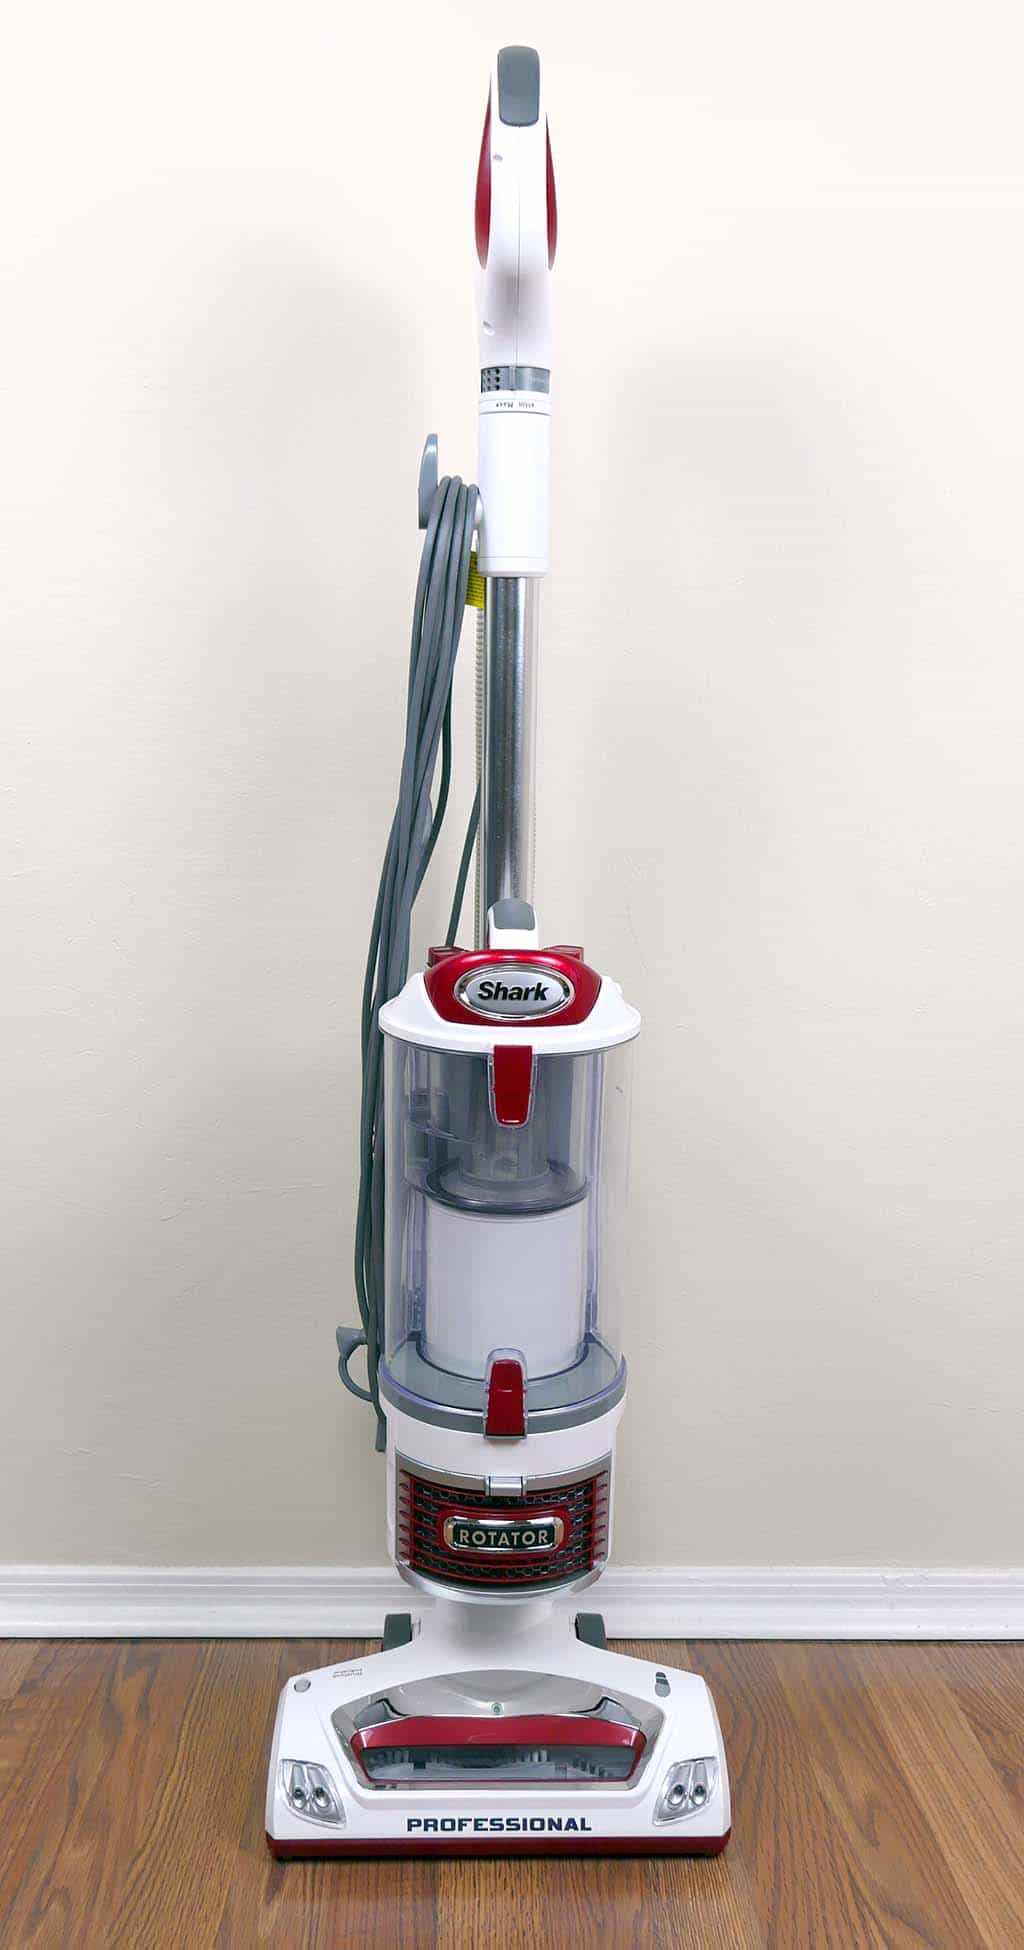 getrotator.com – shark rotator lift-away vacuum cleaner review - products